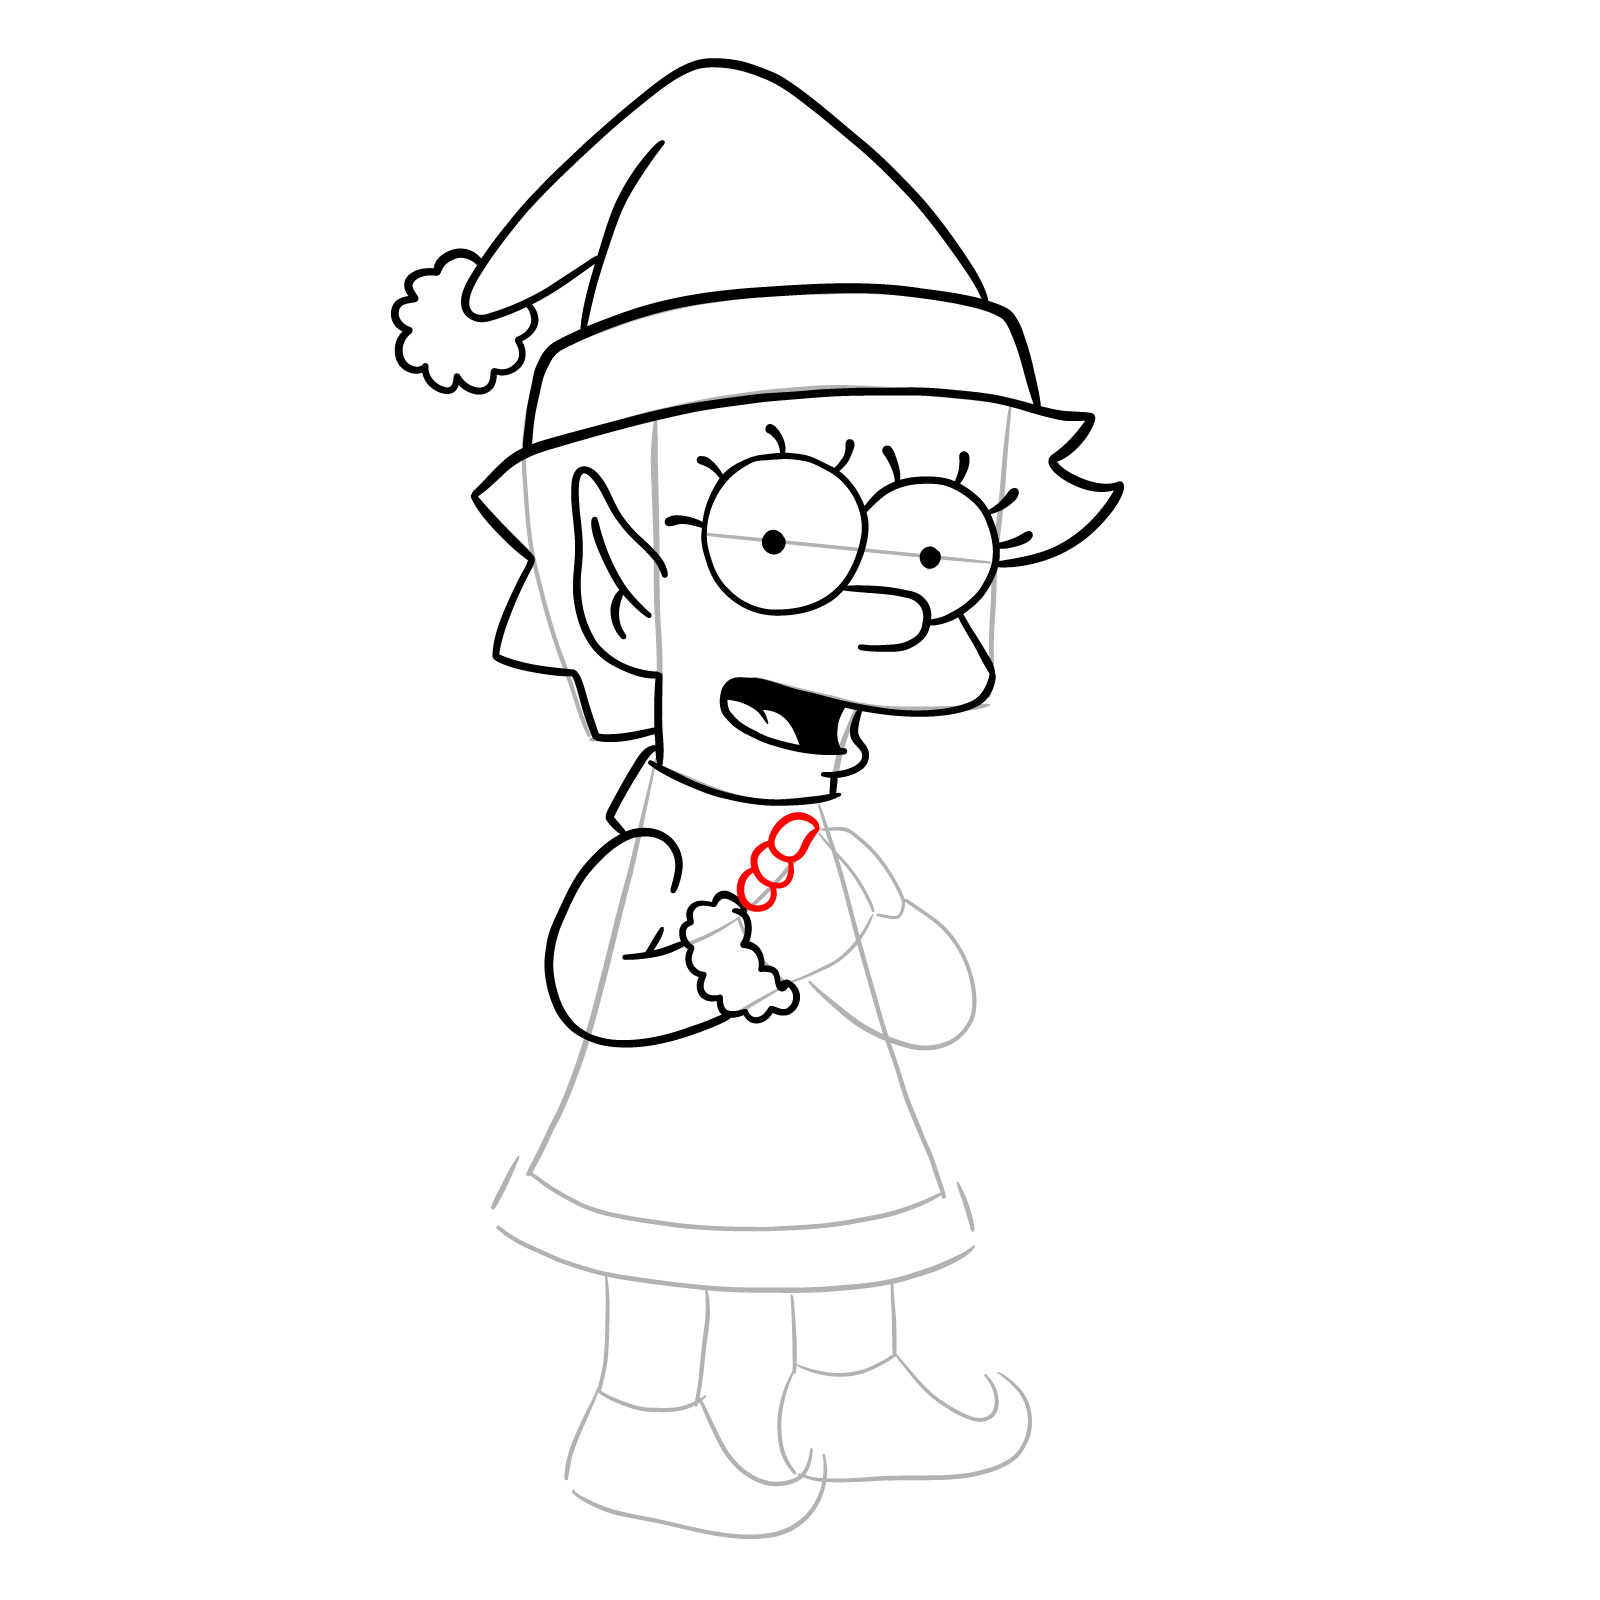 How to draw Christmas Elf Lisa Simpson - step 20